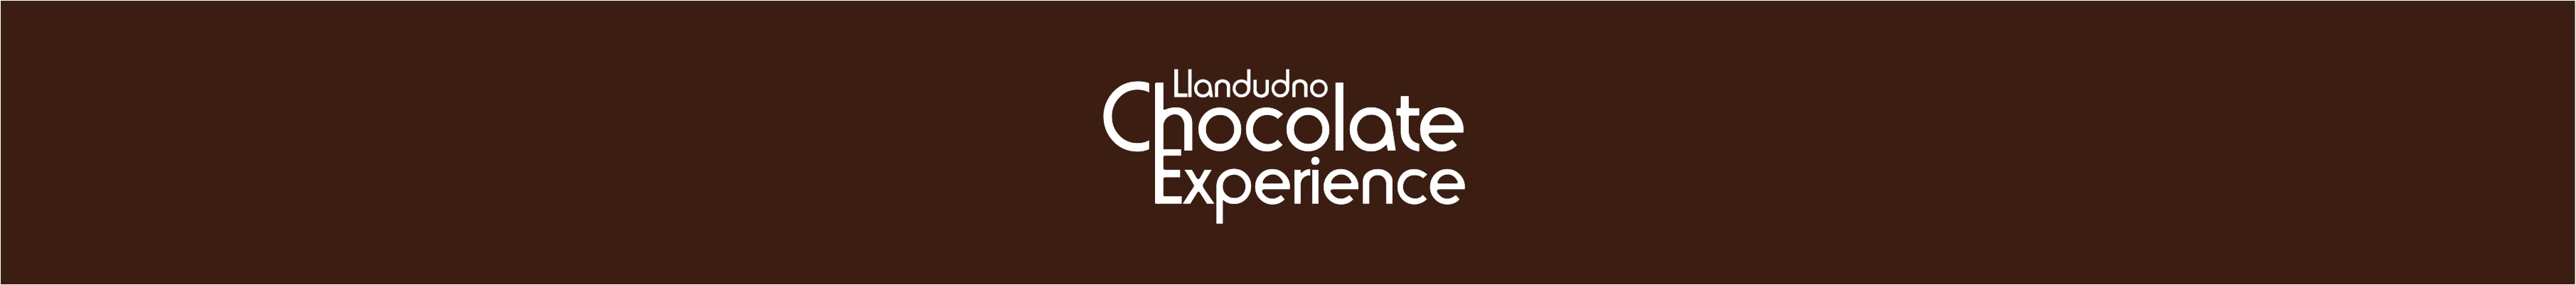 Llandudno Chocolate Experience Logo